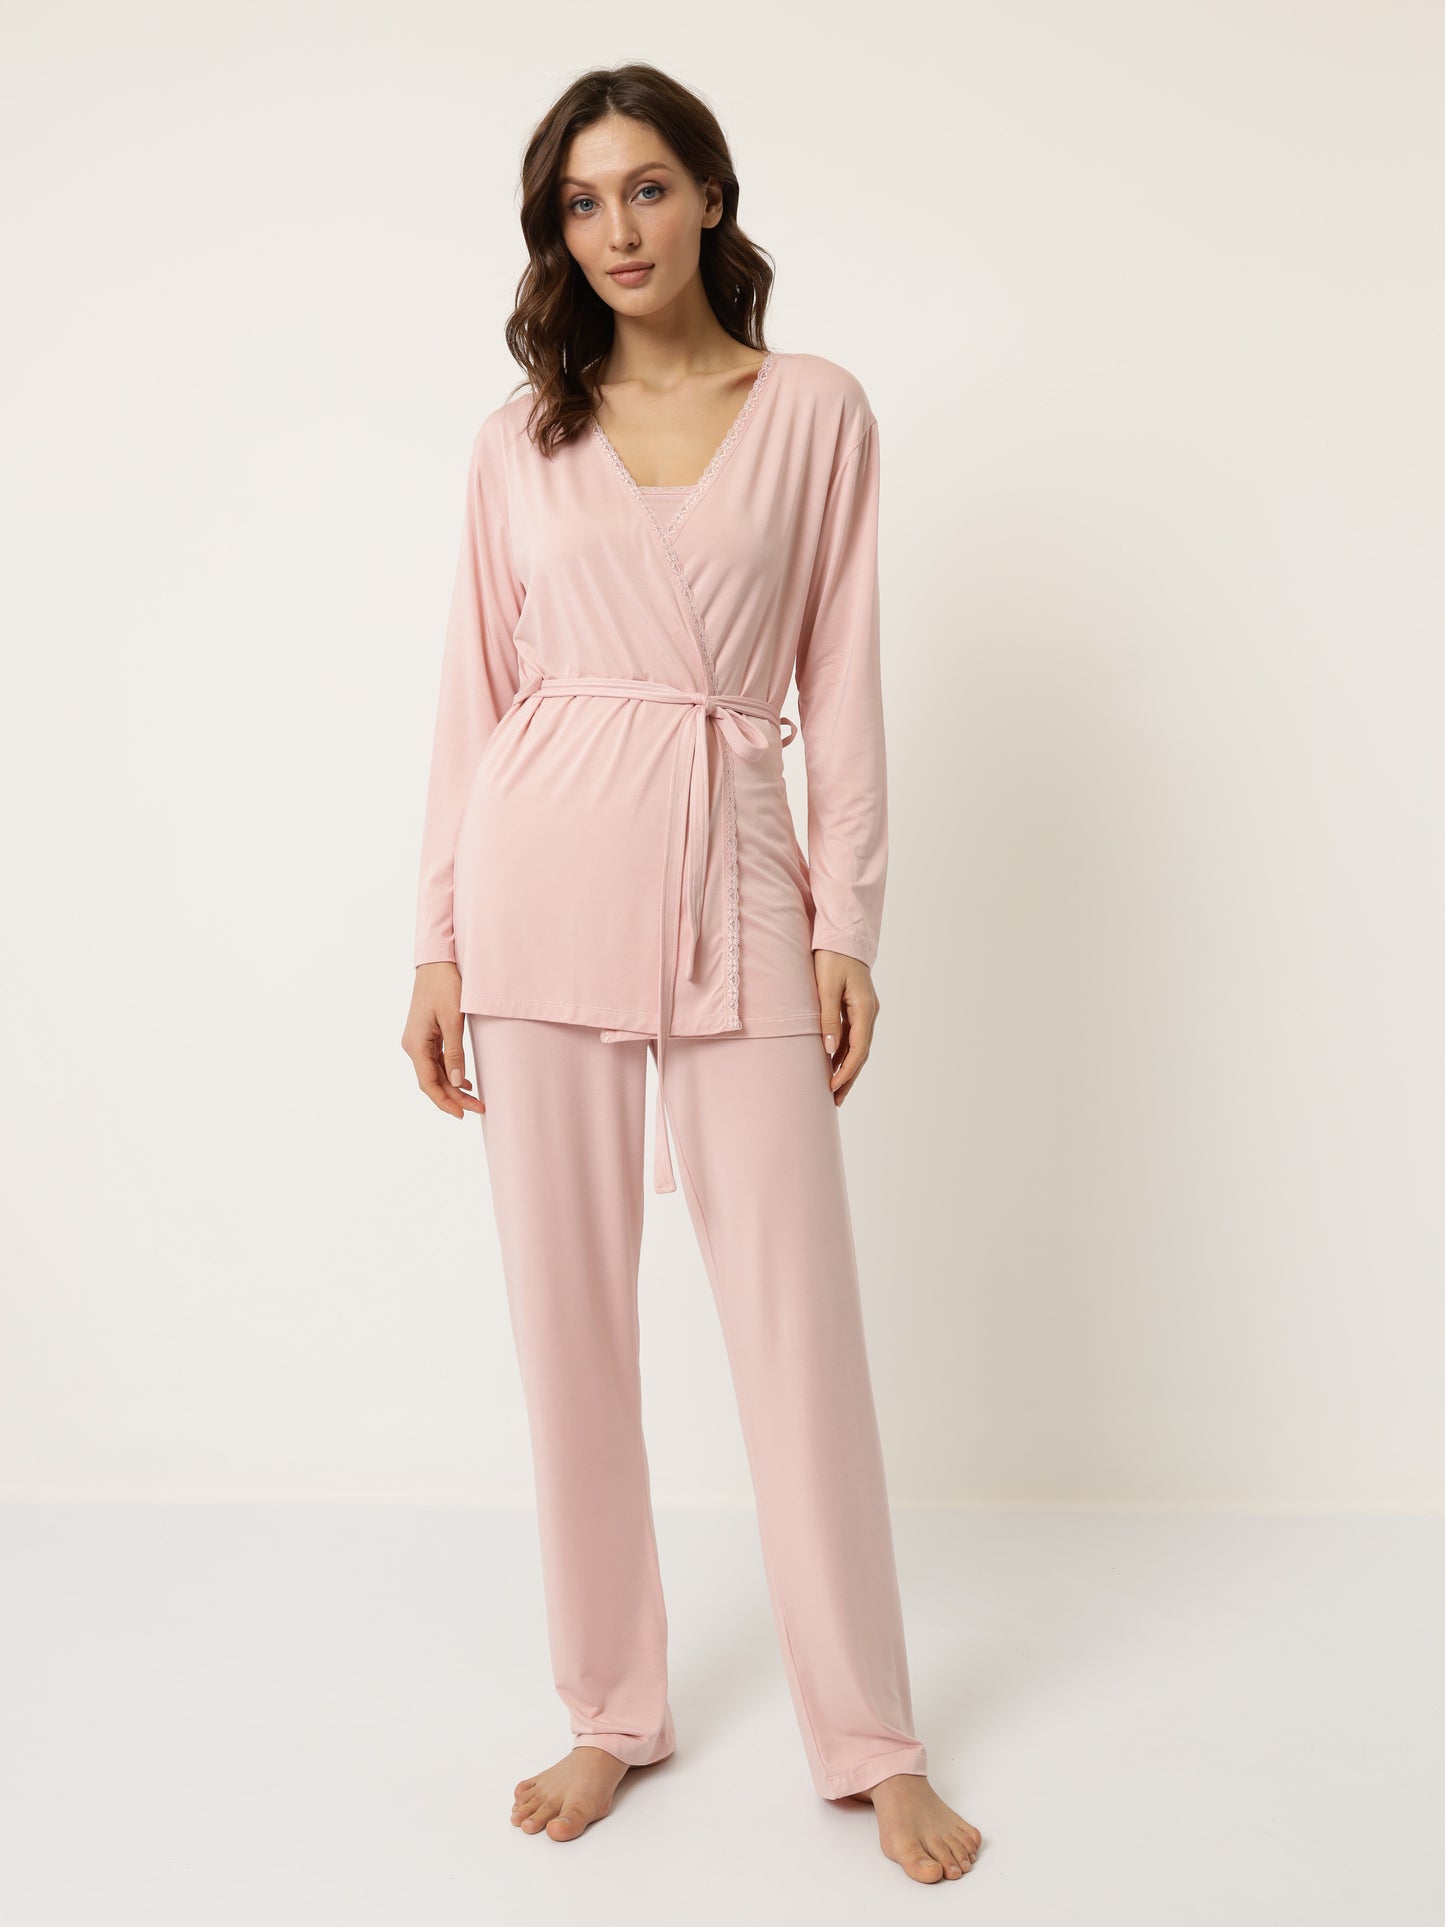 Damen Pyjama Set mit Morgenmantel aus Bambus viskose LMS-6176 Pink Rosa